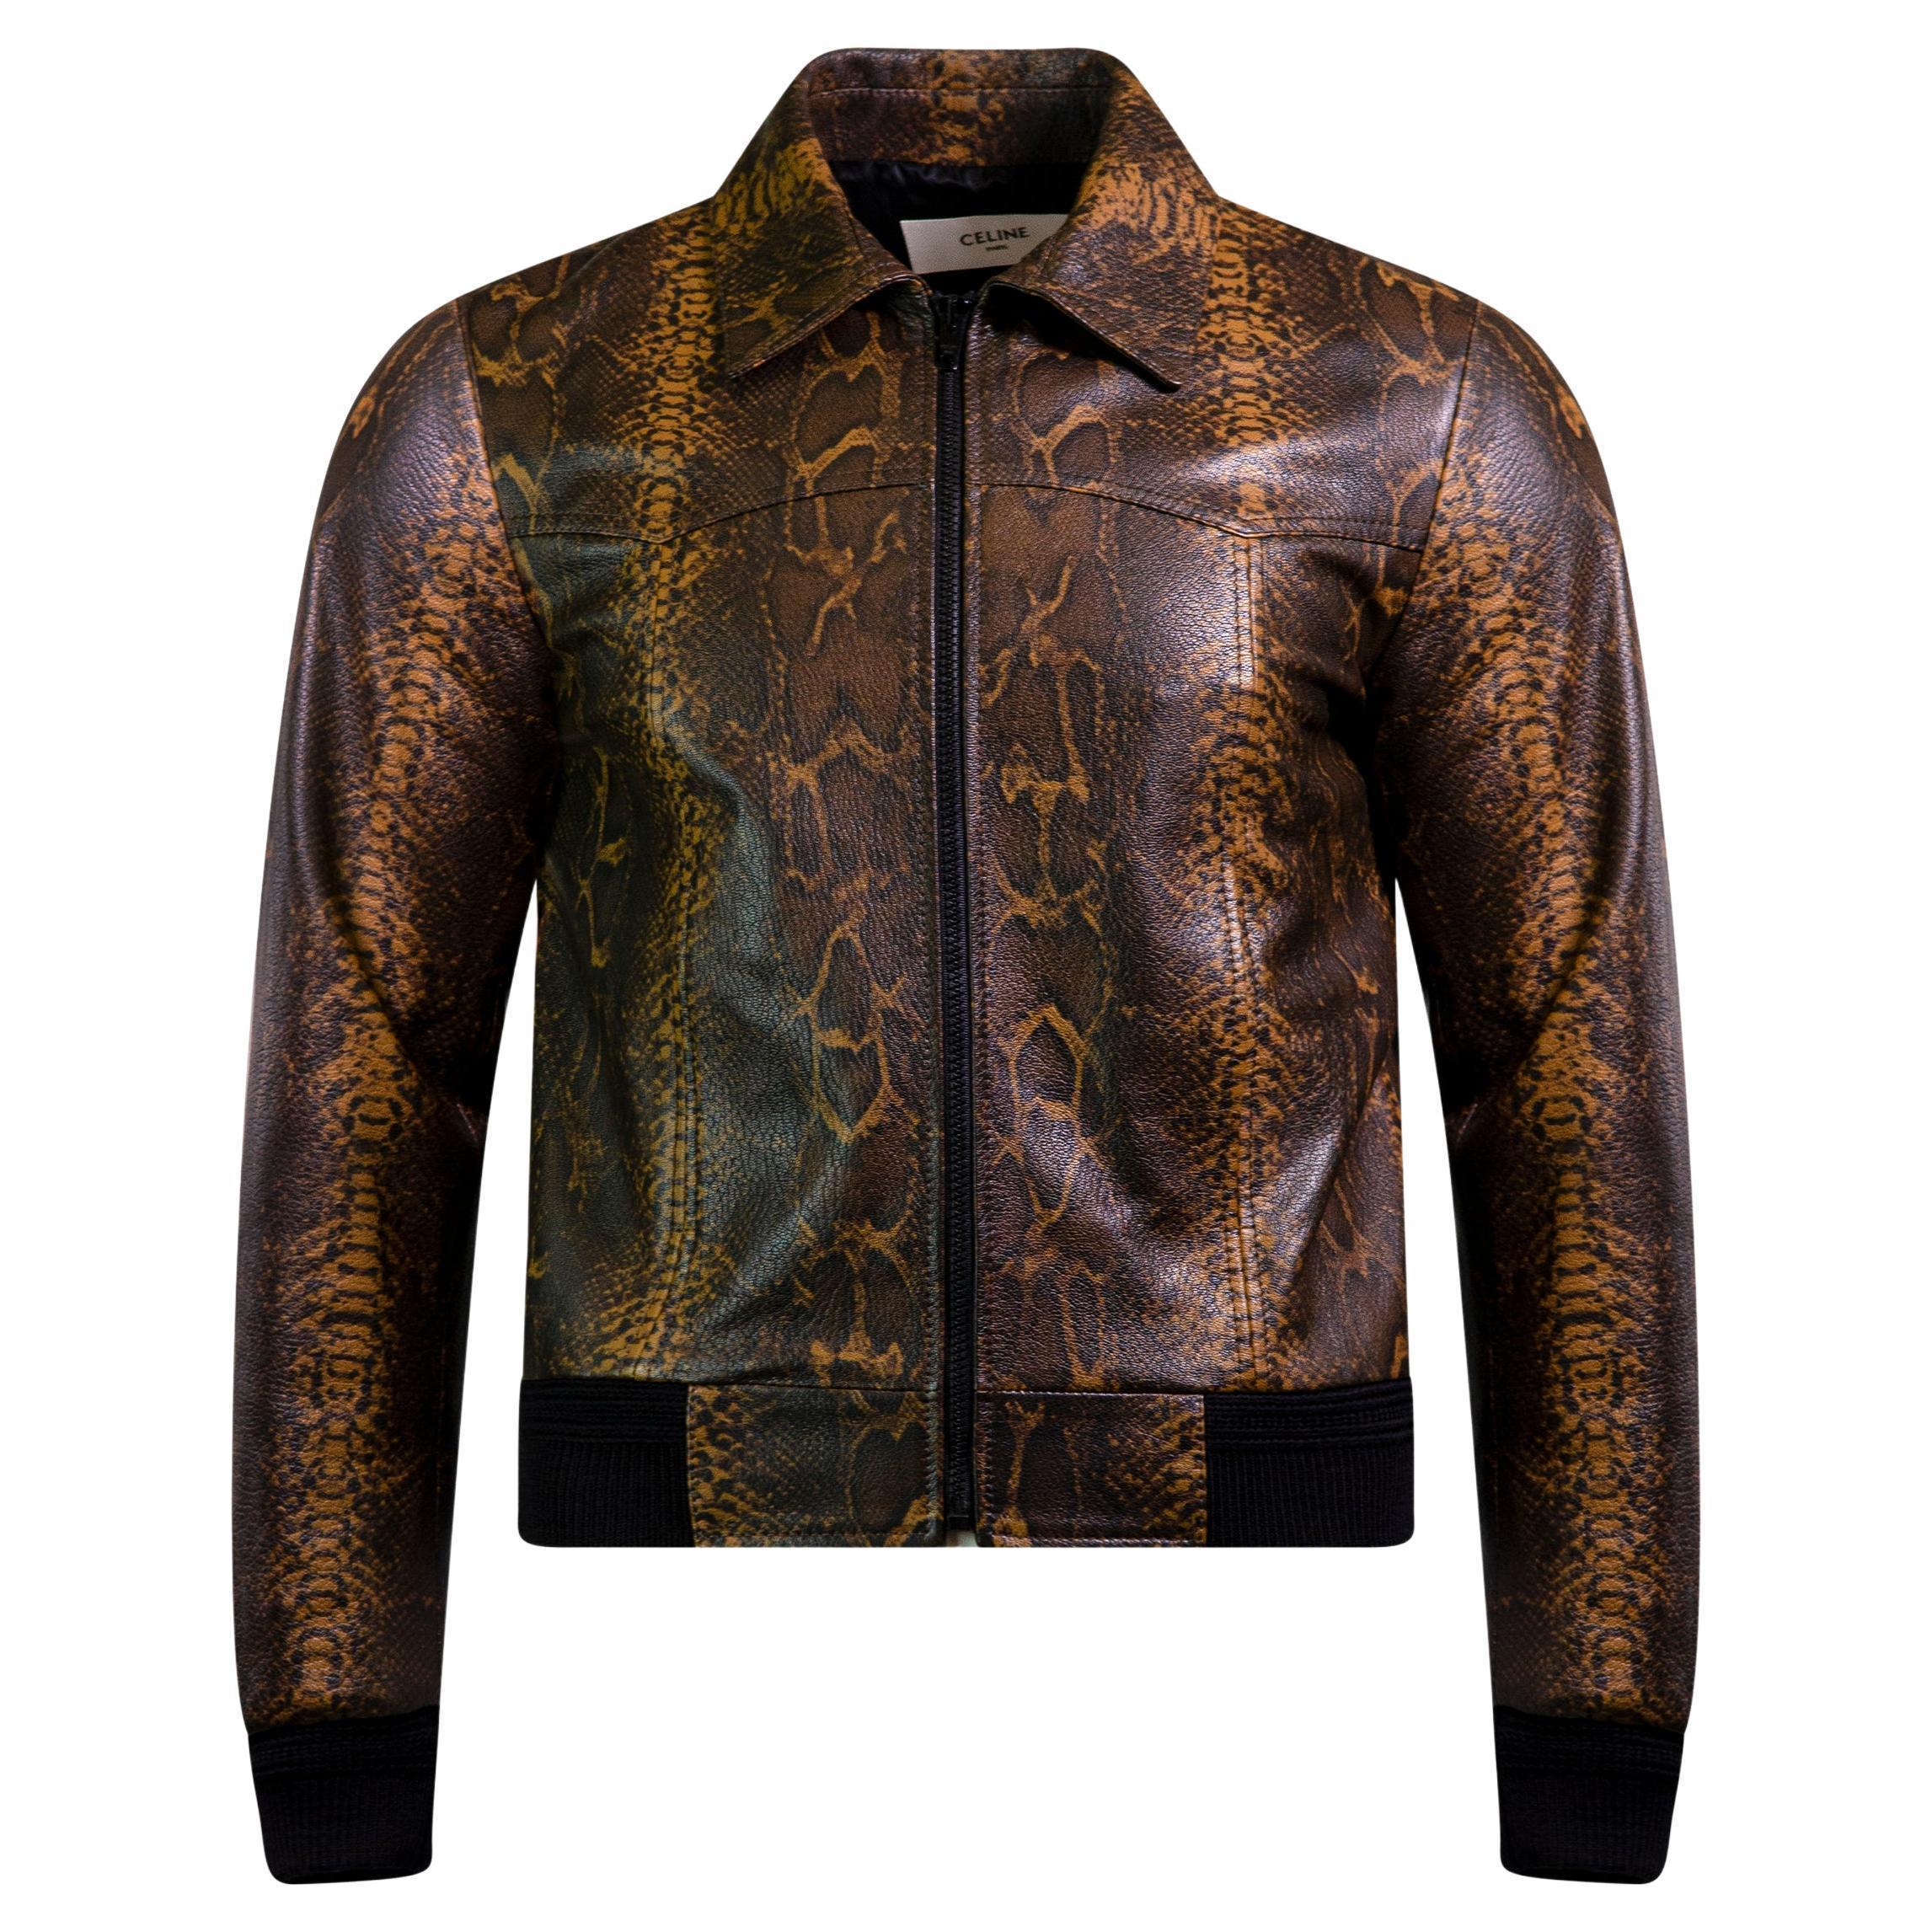 CELINE BY HEDI SLIMANE F/W2019 Rare Runway Snakeskin Print Leather Jacket For Sale